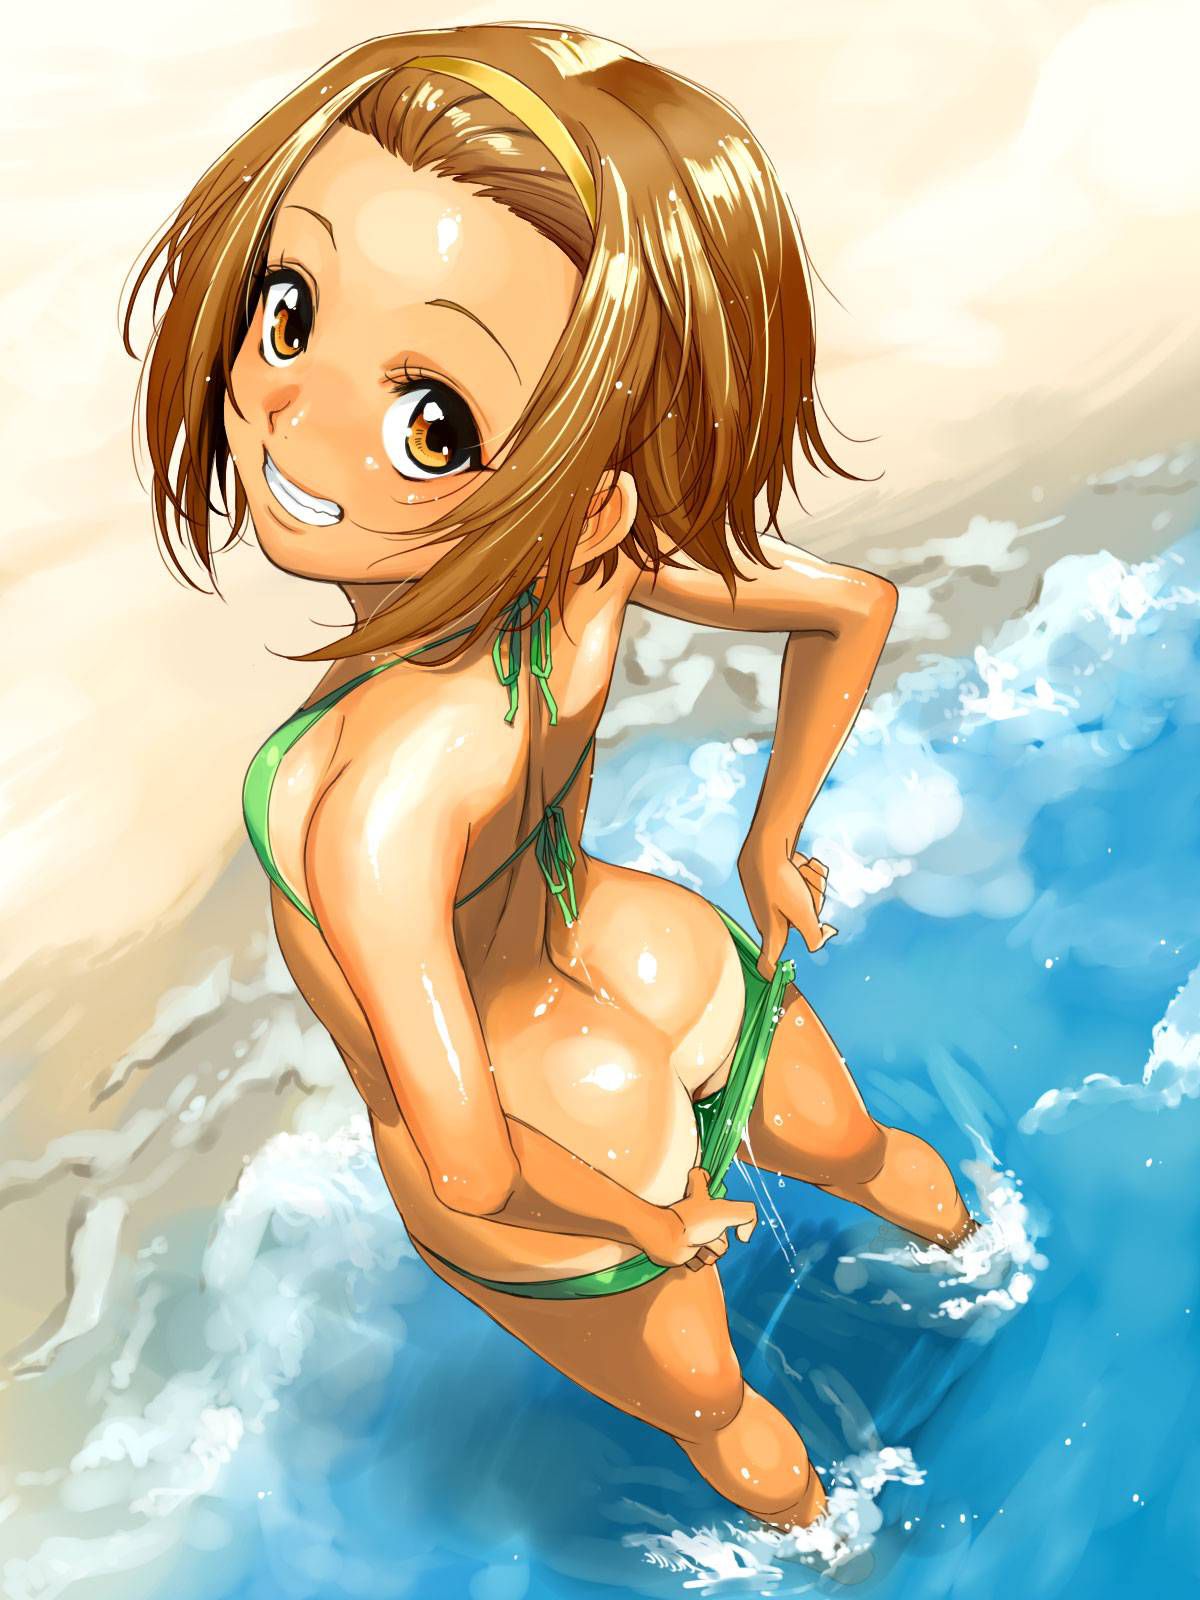 Summer Break! Swimsuit Picture of Beautiful Girl Vol. 7 6